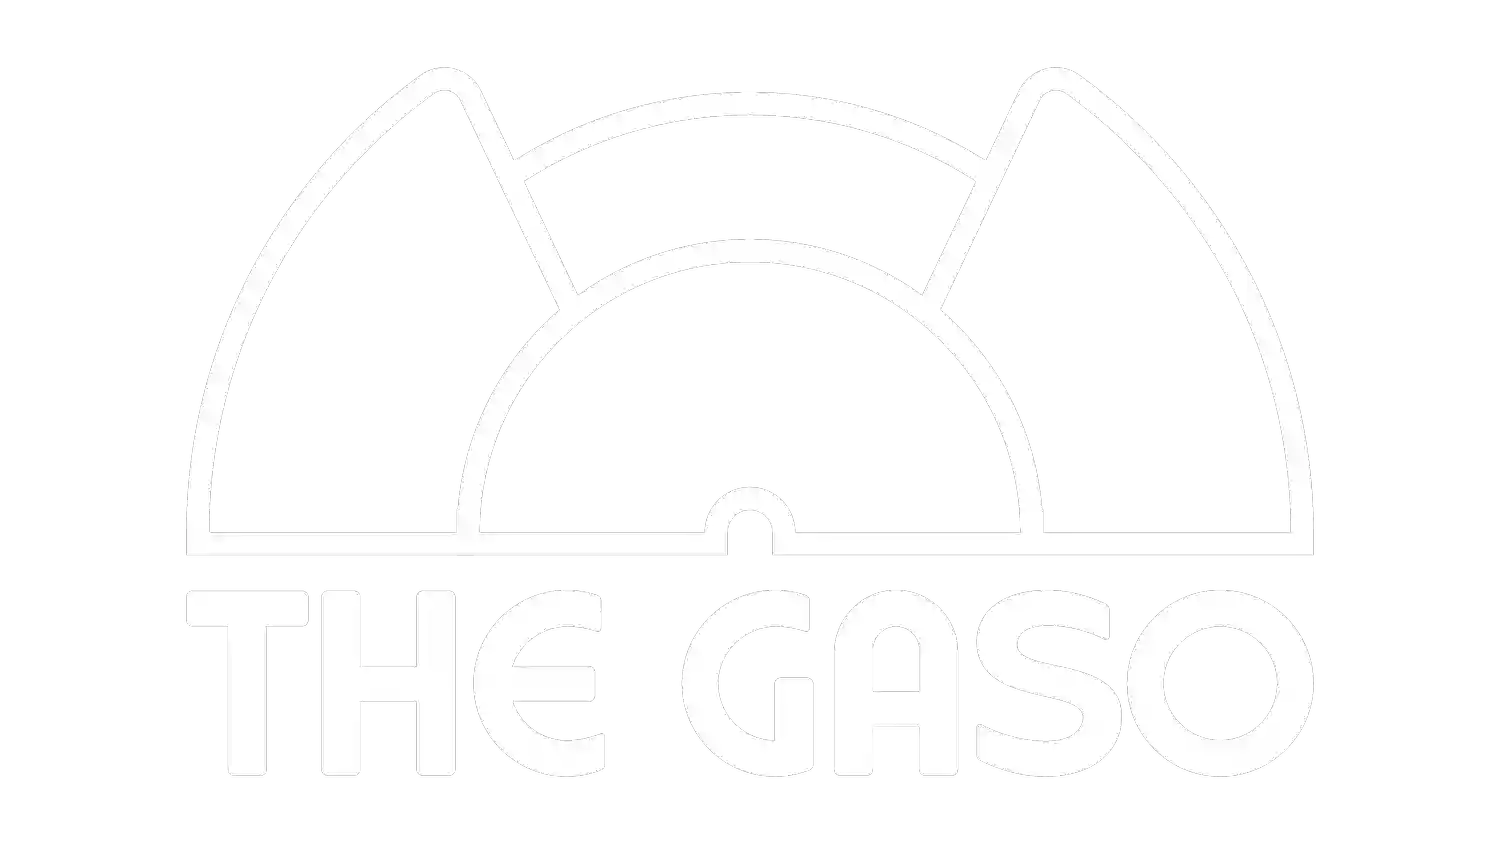 The Gasometer Hotel